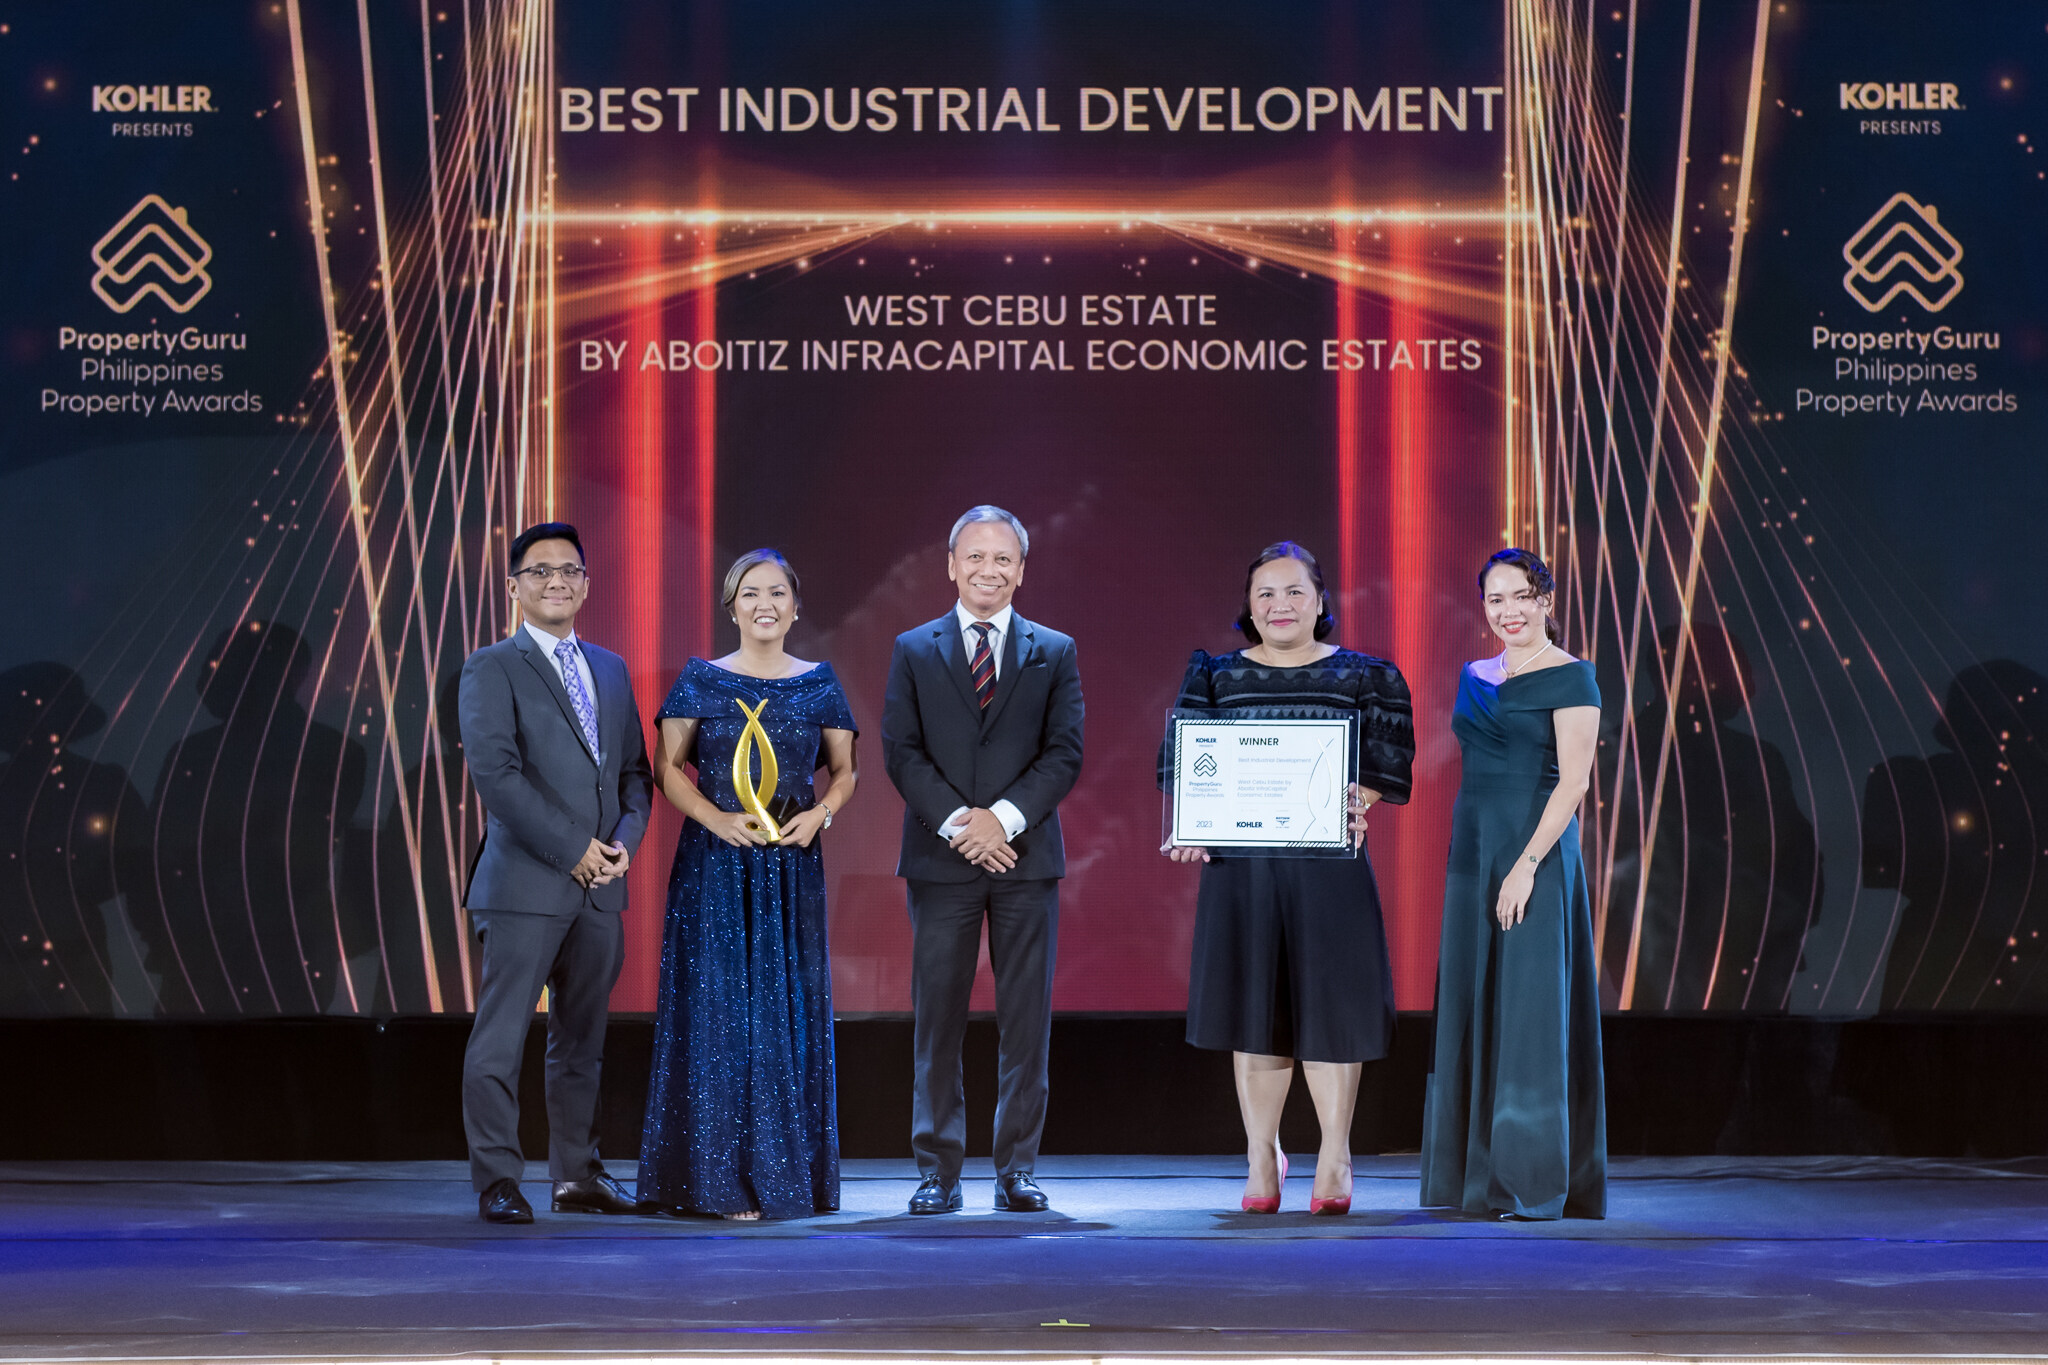 Aboitiz InfraCapital’s West Cebu Estate wins  ‘Best Industrial Development’ title,  spotlights Cebu as a premier industrial investment destination